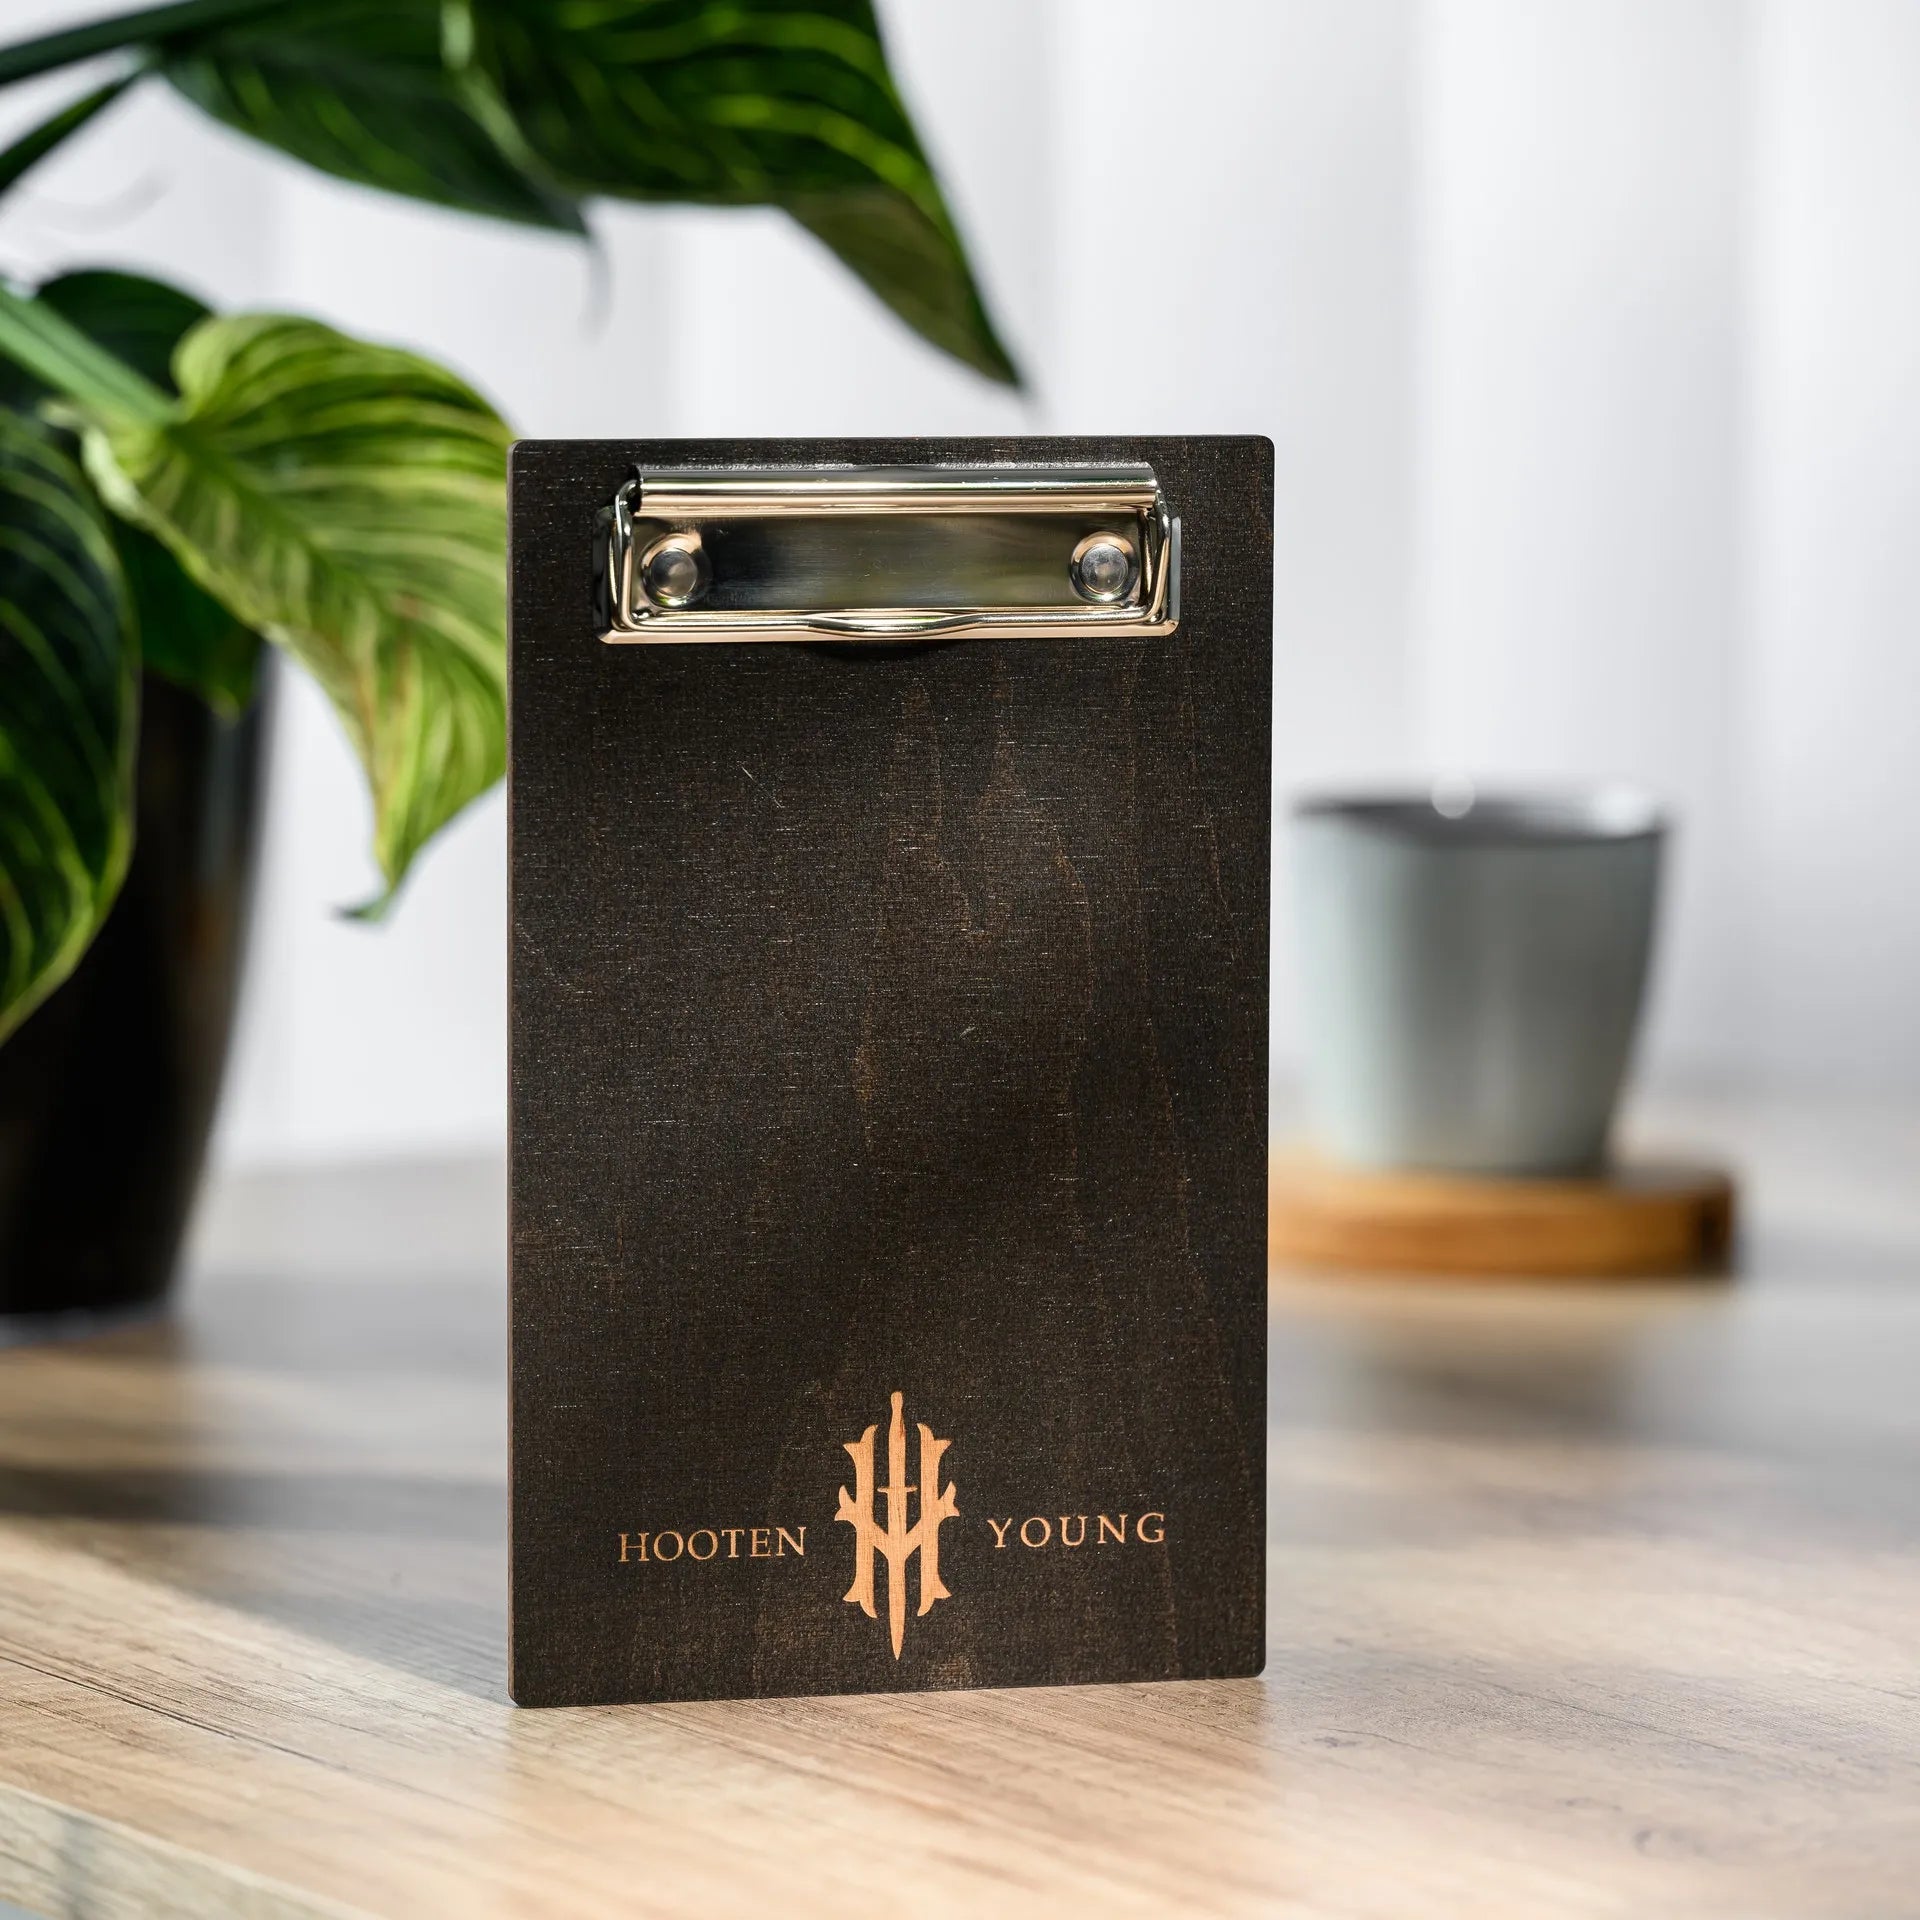 Wooden bill holder with metal binder, ideal for restaurants, combining durability with a modern design for elegant bill presentation.